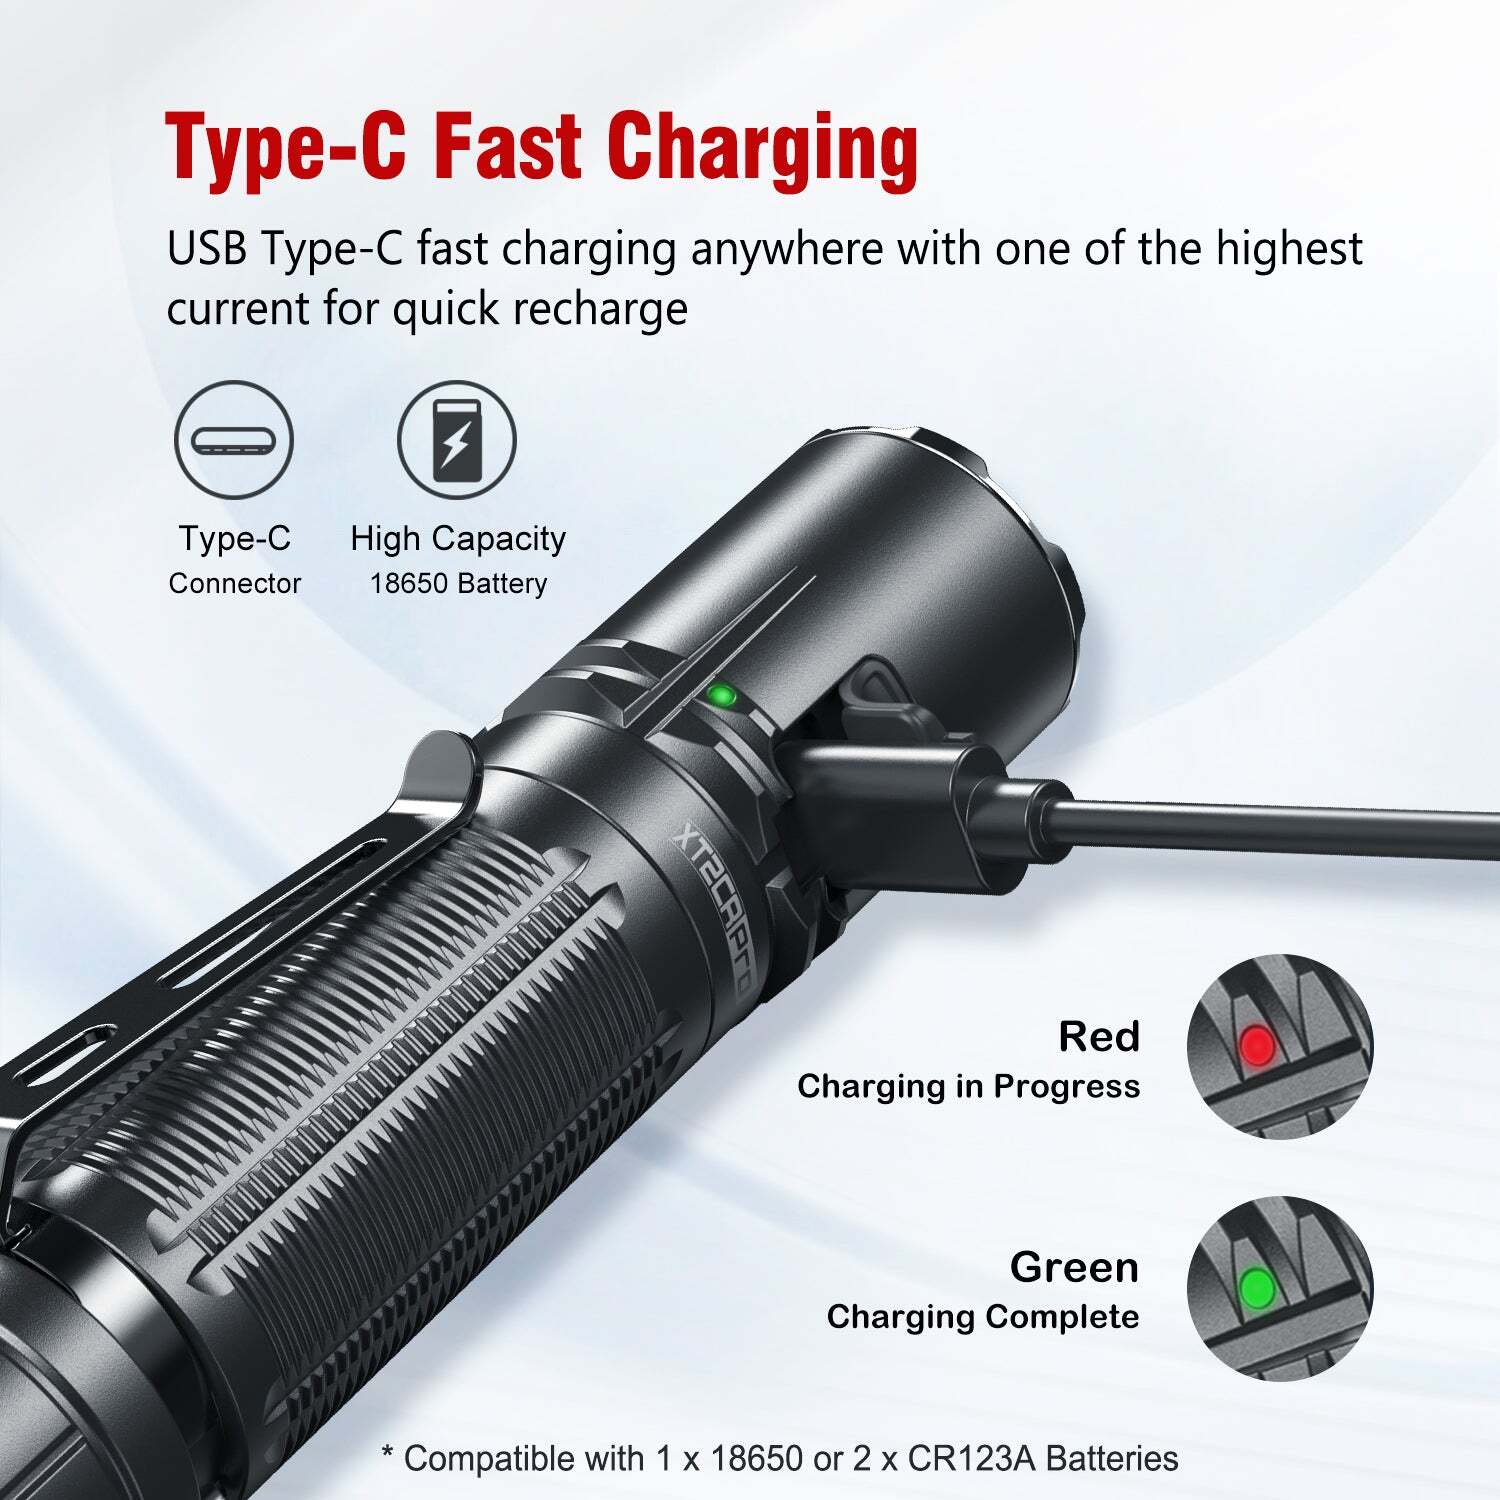 Klarus XT2CR Pro 2100 Lumens  XHP35 HD Type-C Rechargeable Tactical Flashlight